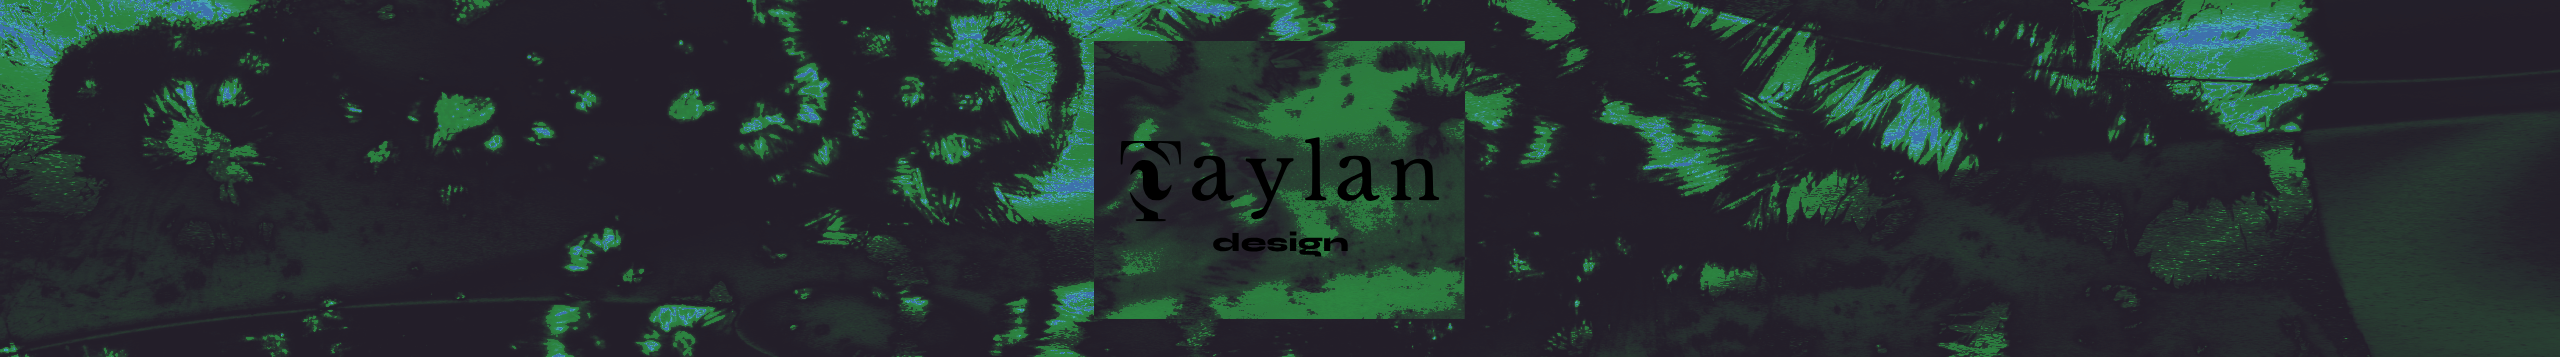 3D Taylan's profile banner